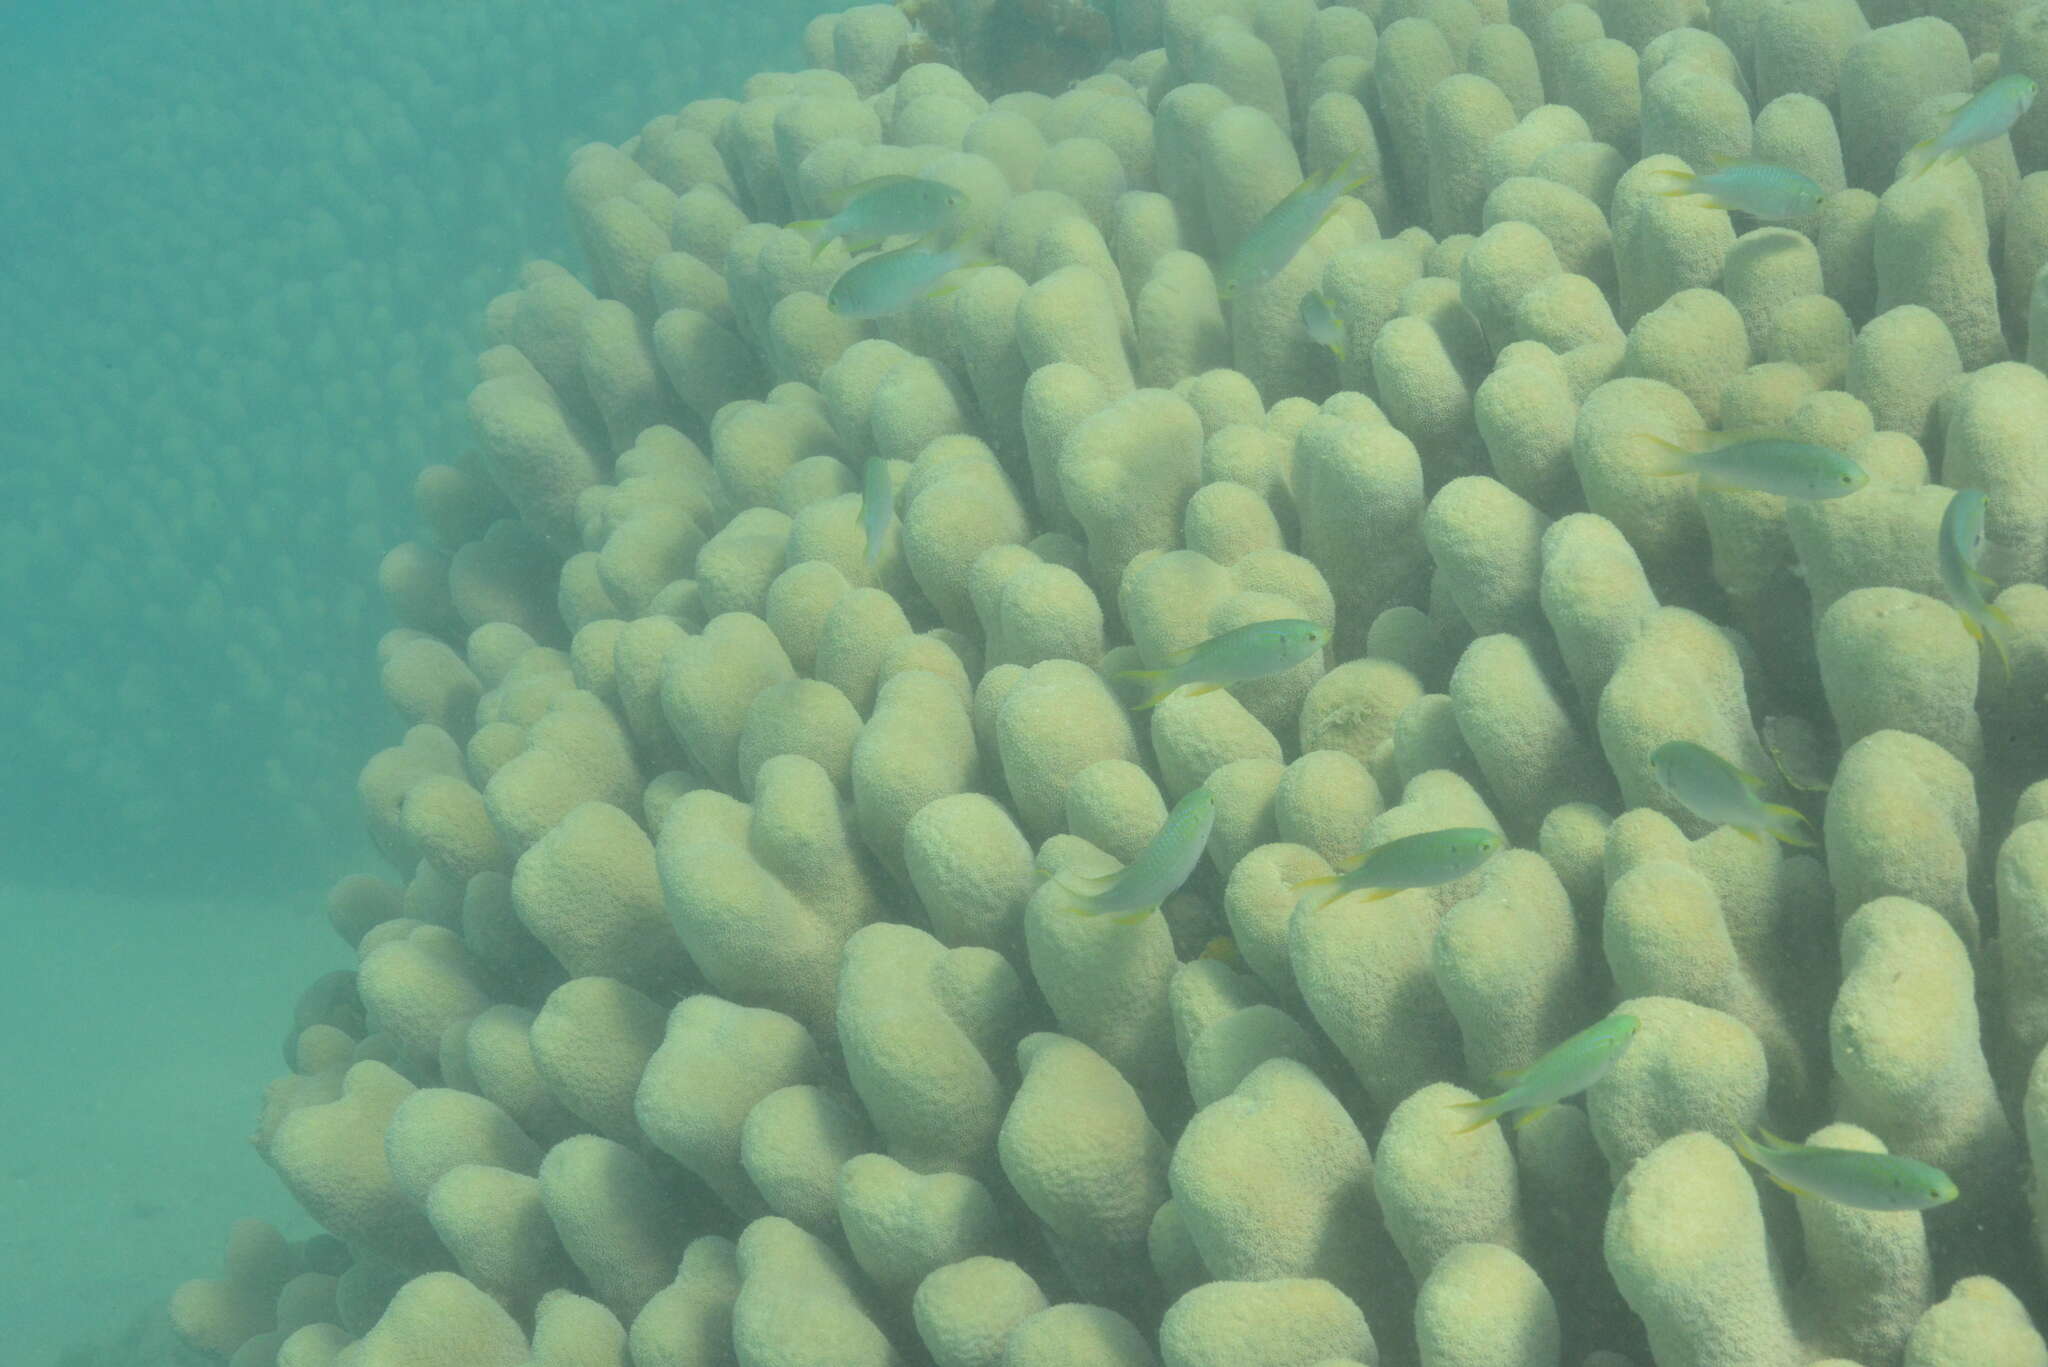 Image of Encrusting Sandpaper Coral